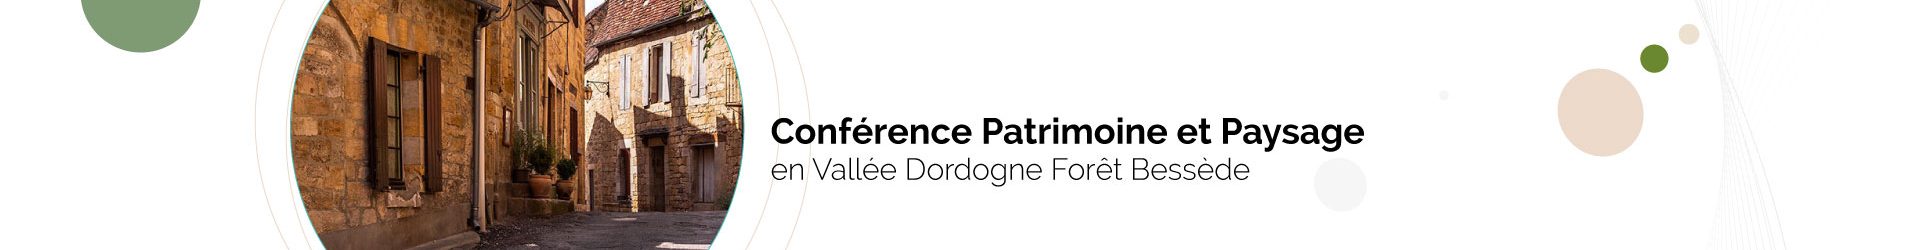 conférence patrimoine et paysage en Vallée Dordogne et Forêt Bessède